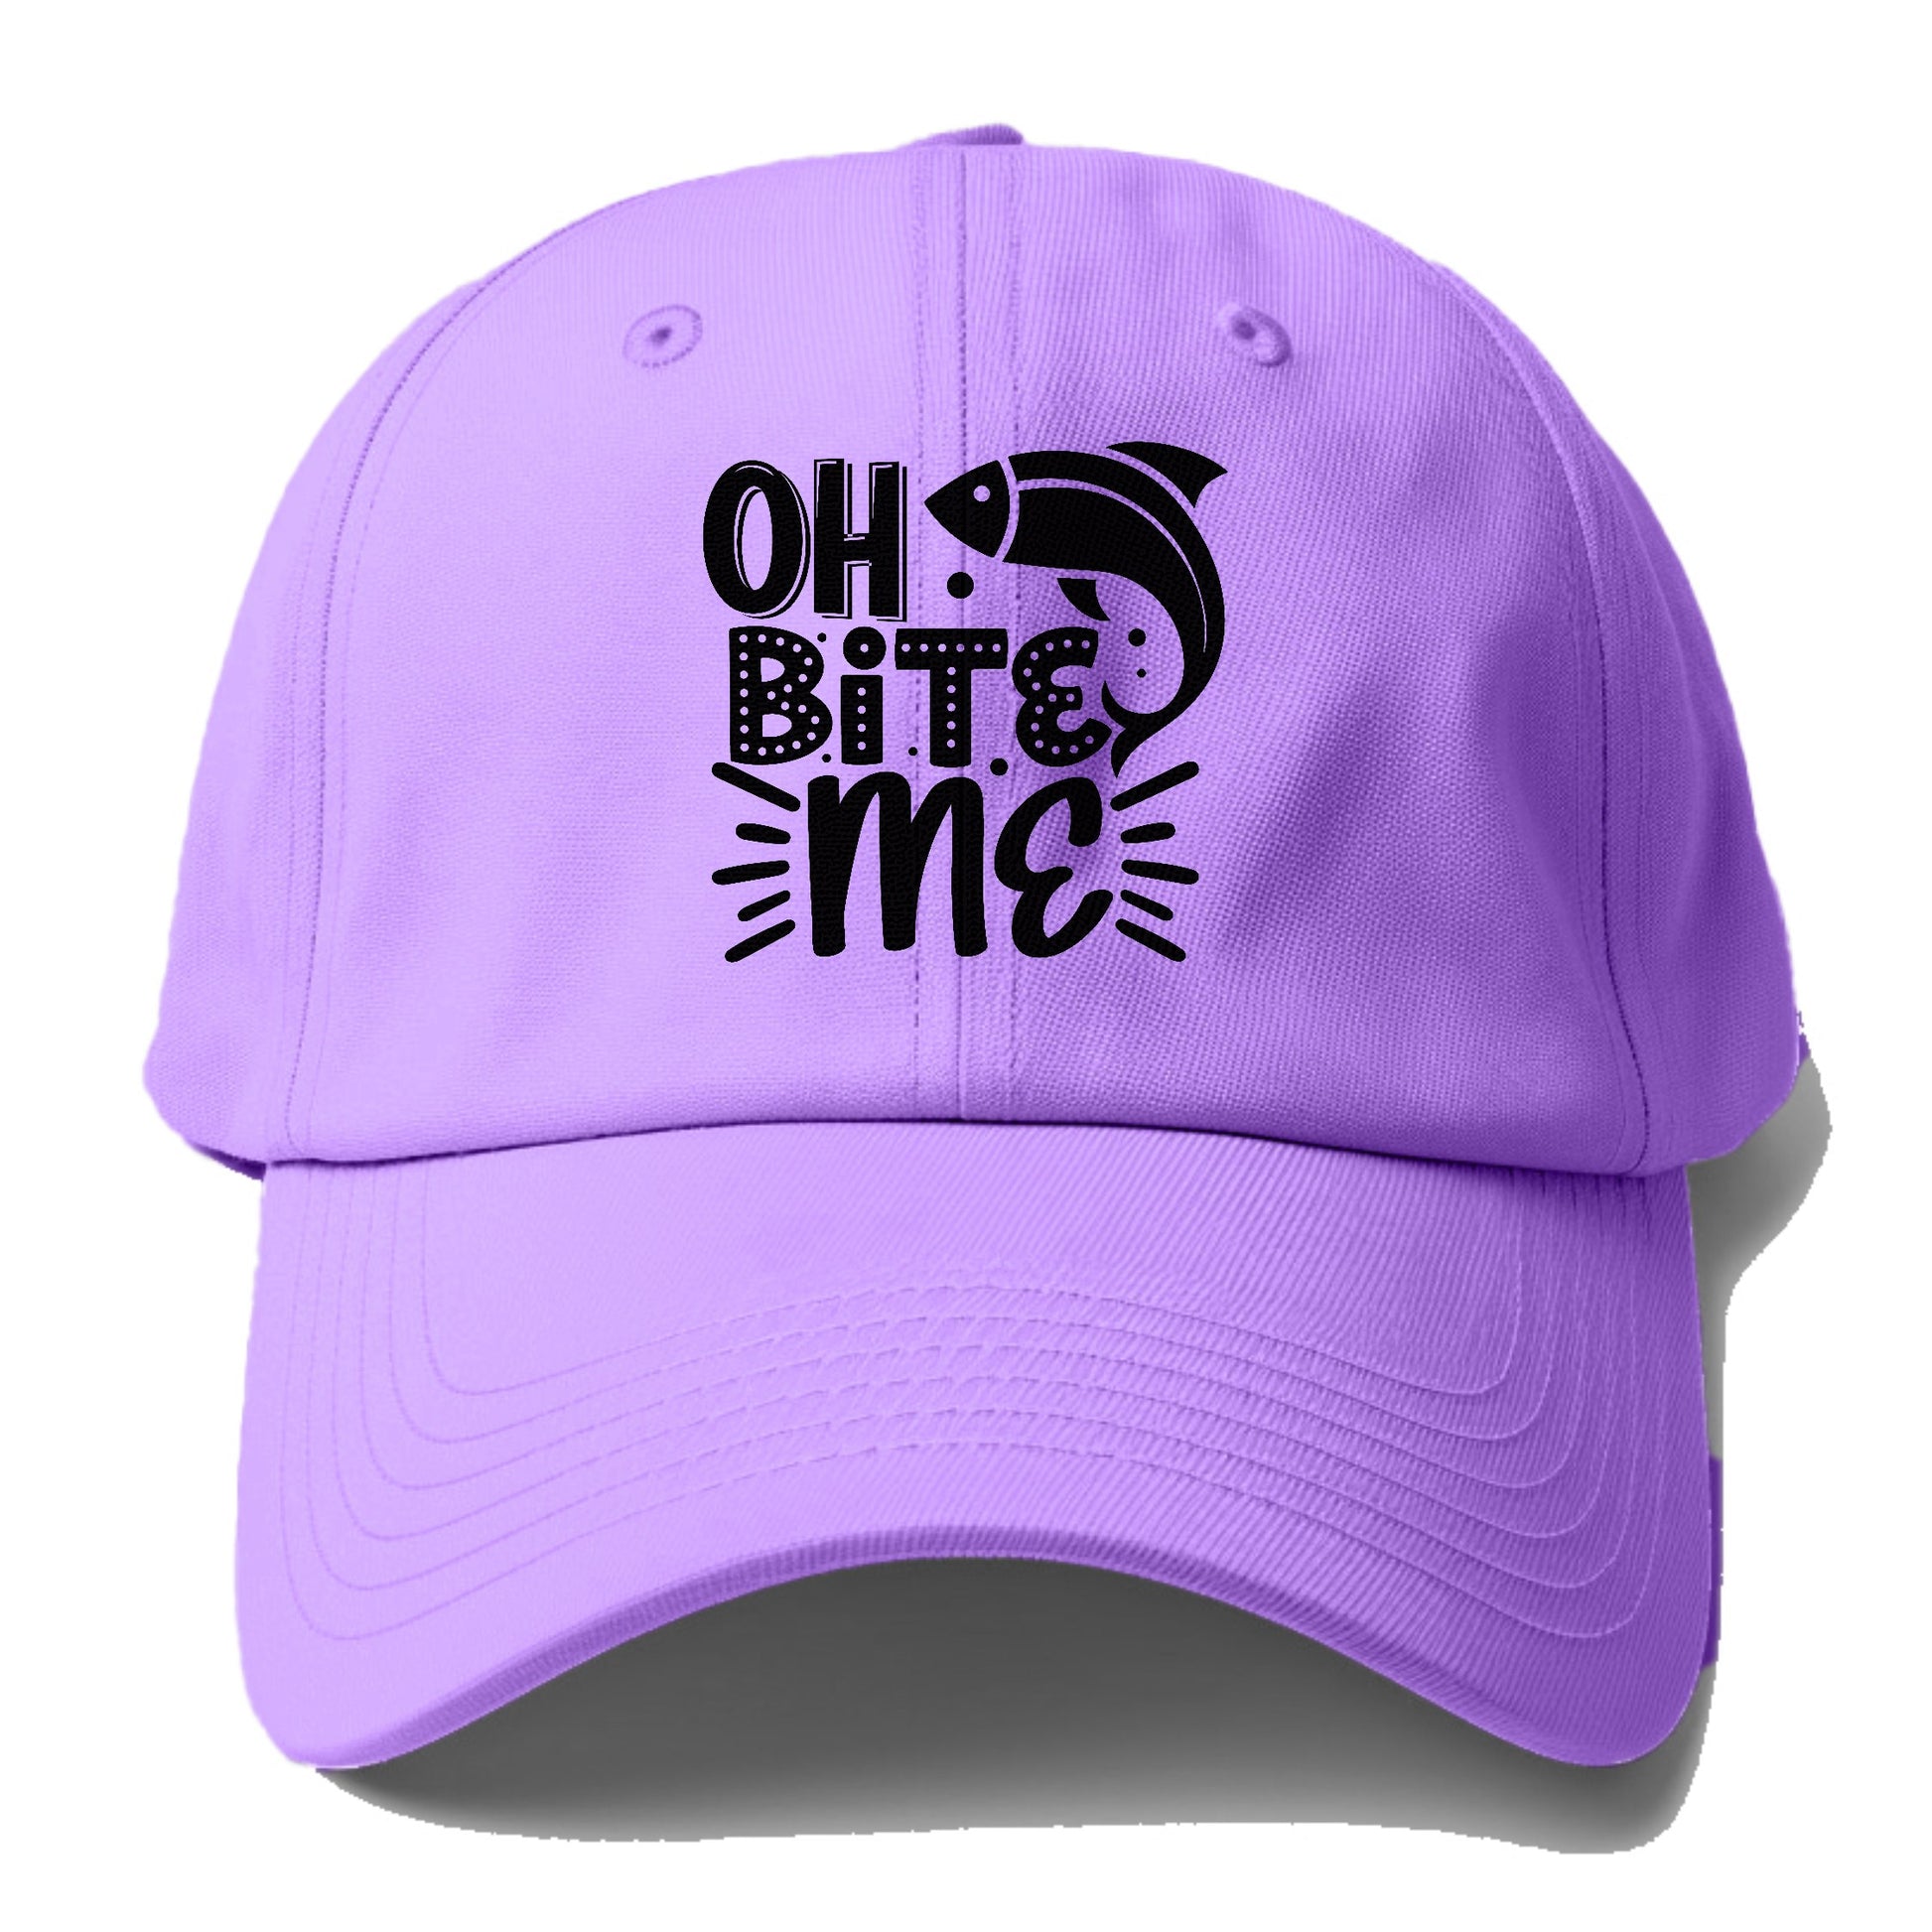 oh bite me Hat